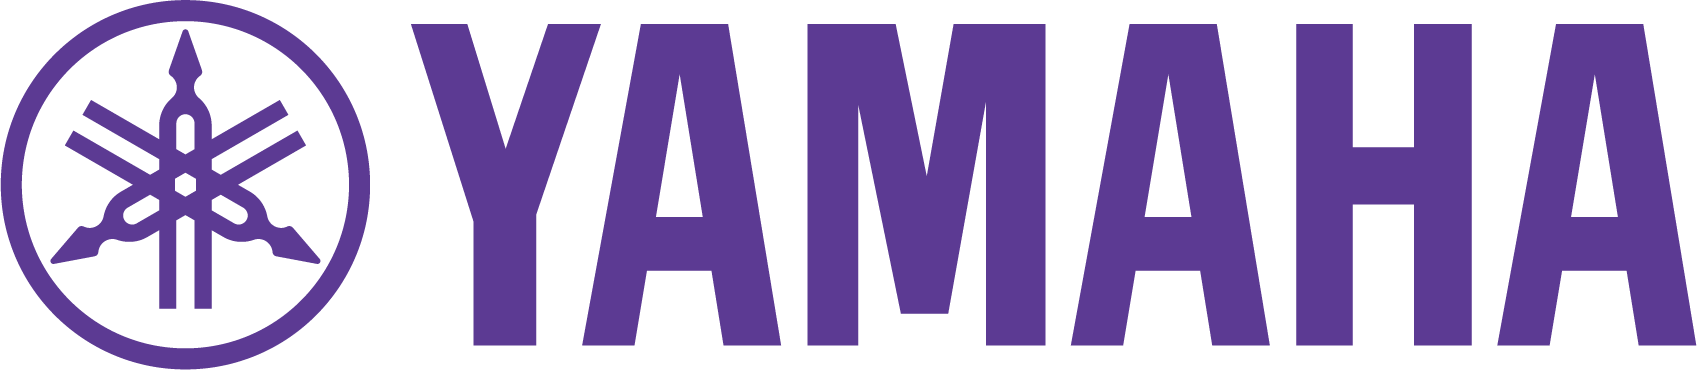 yamaha_logo_violet-1200.png